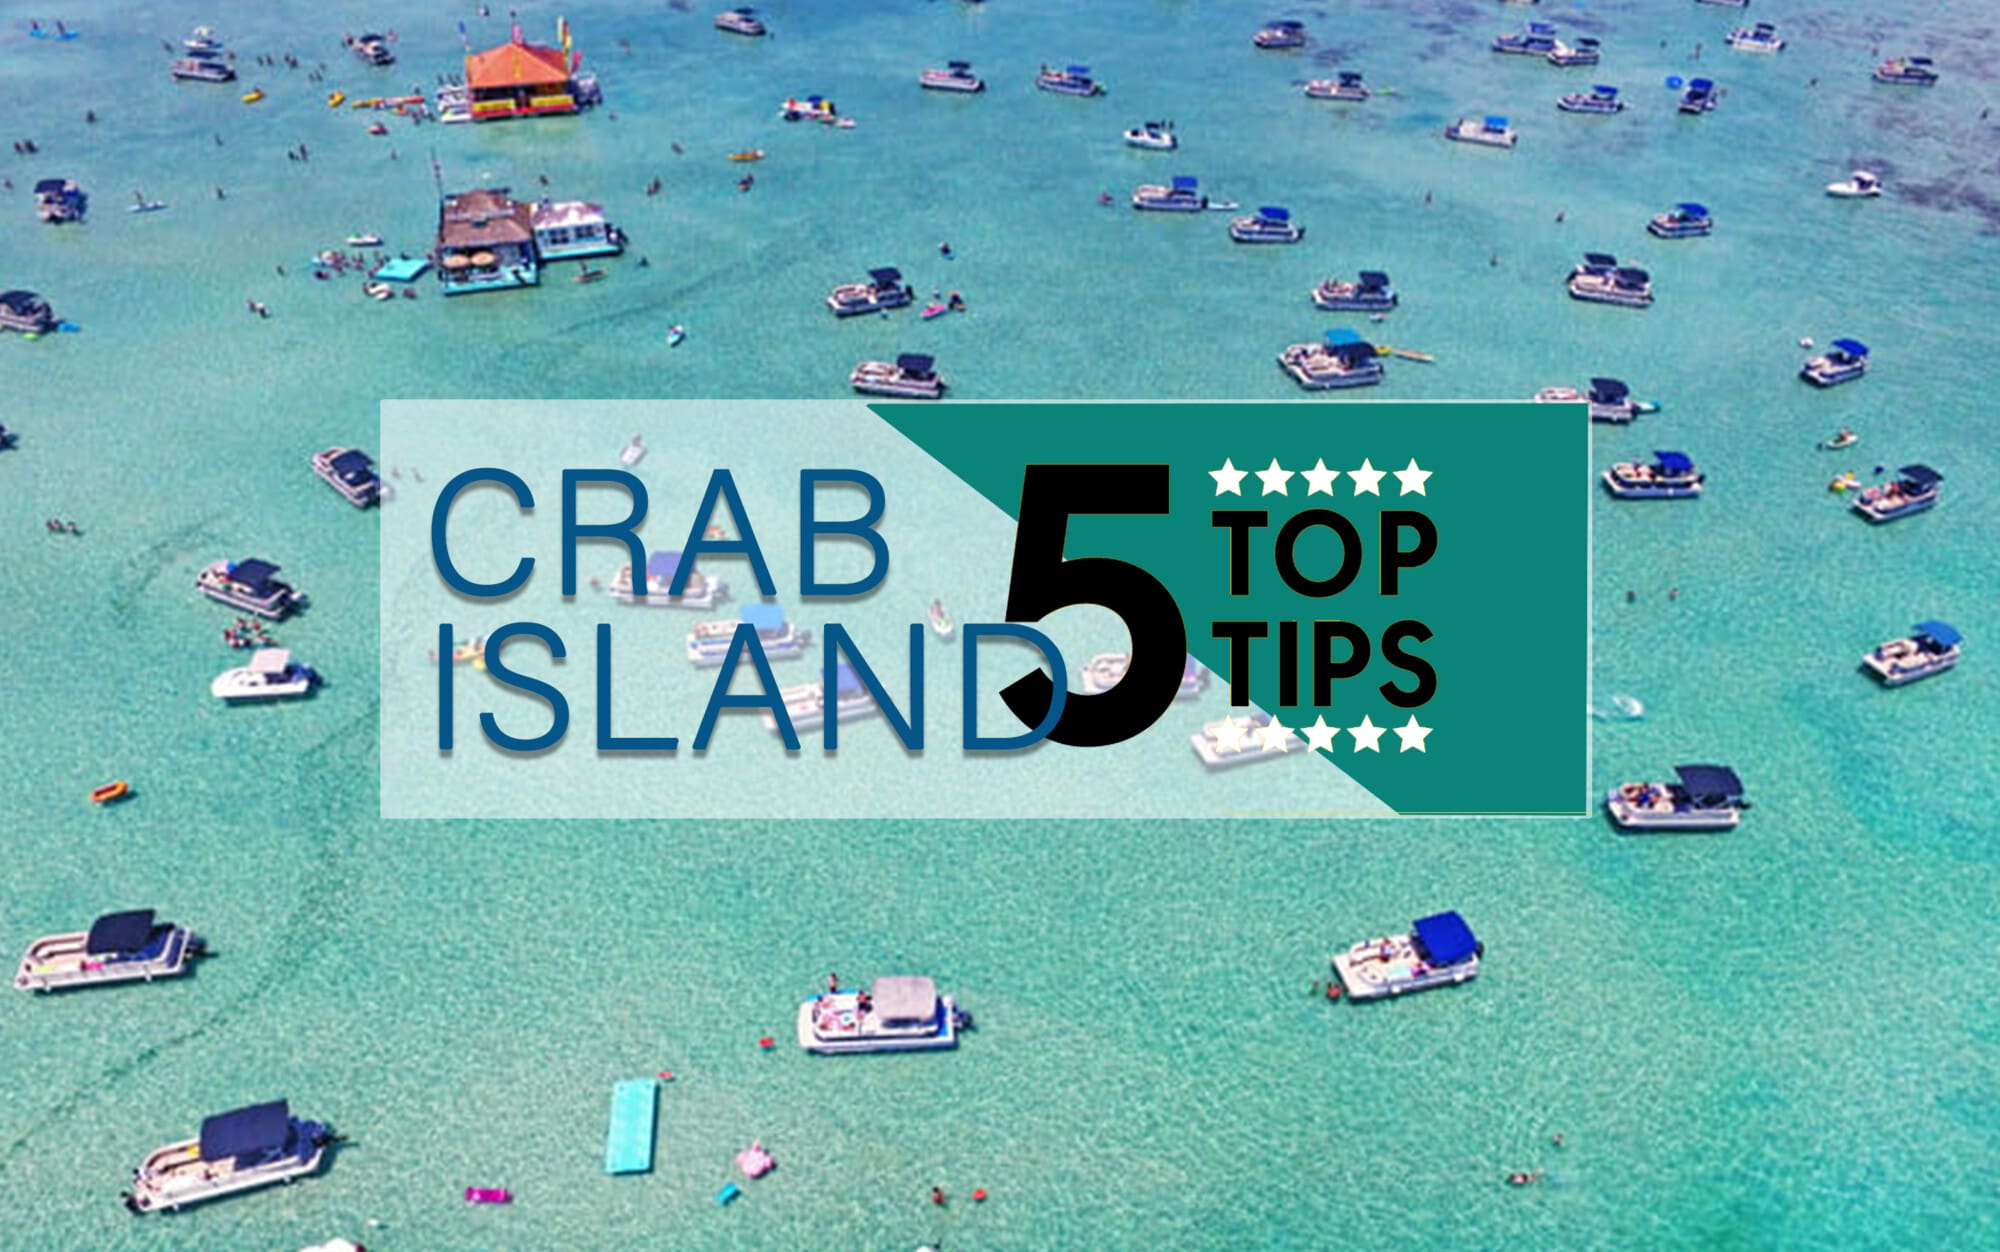 Crab Island Top Tips